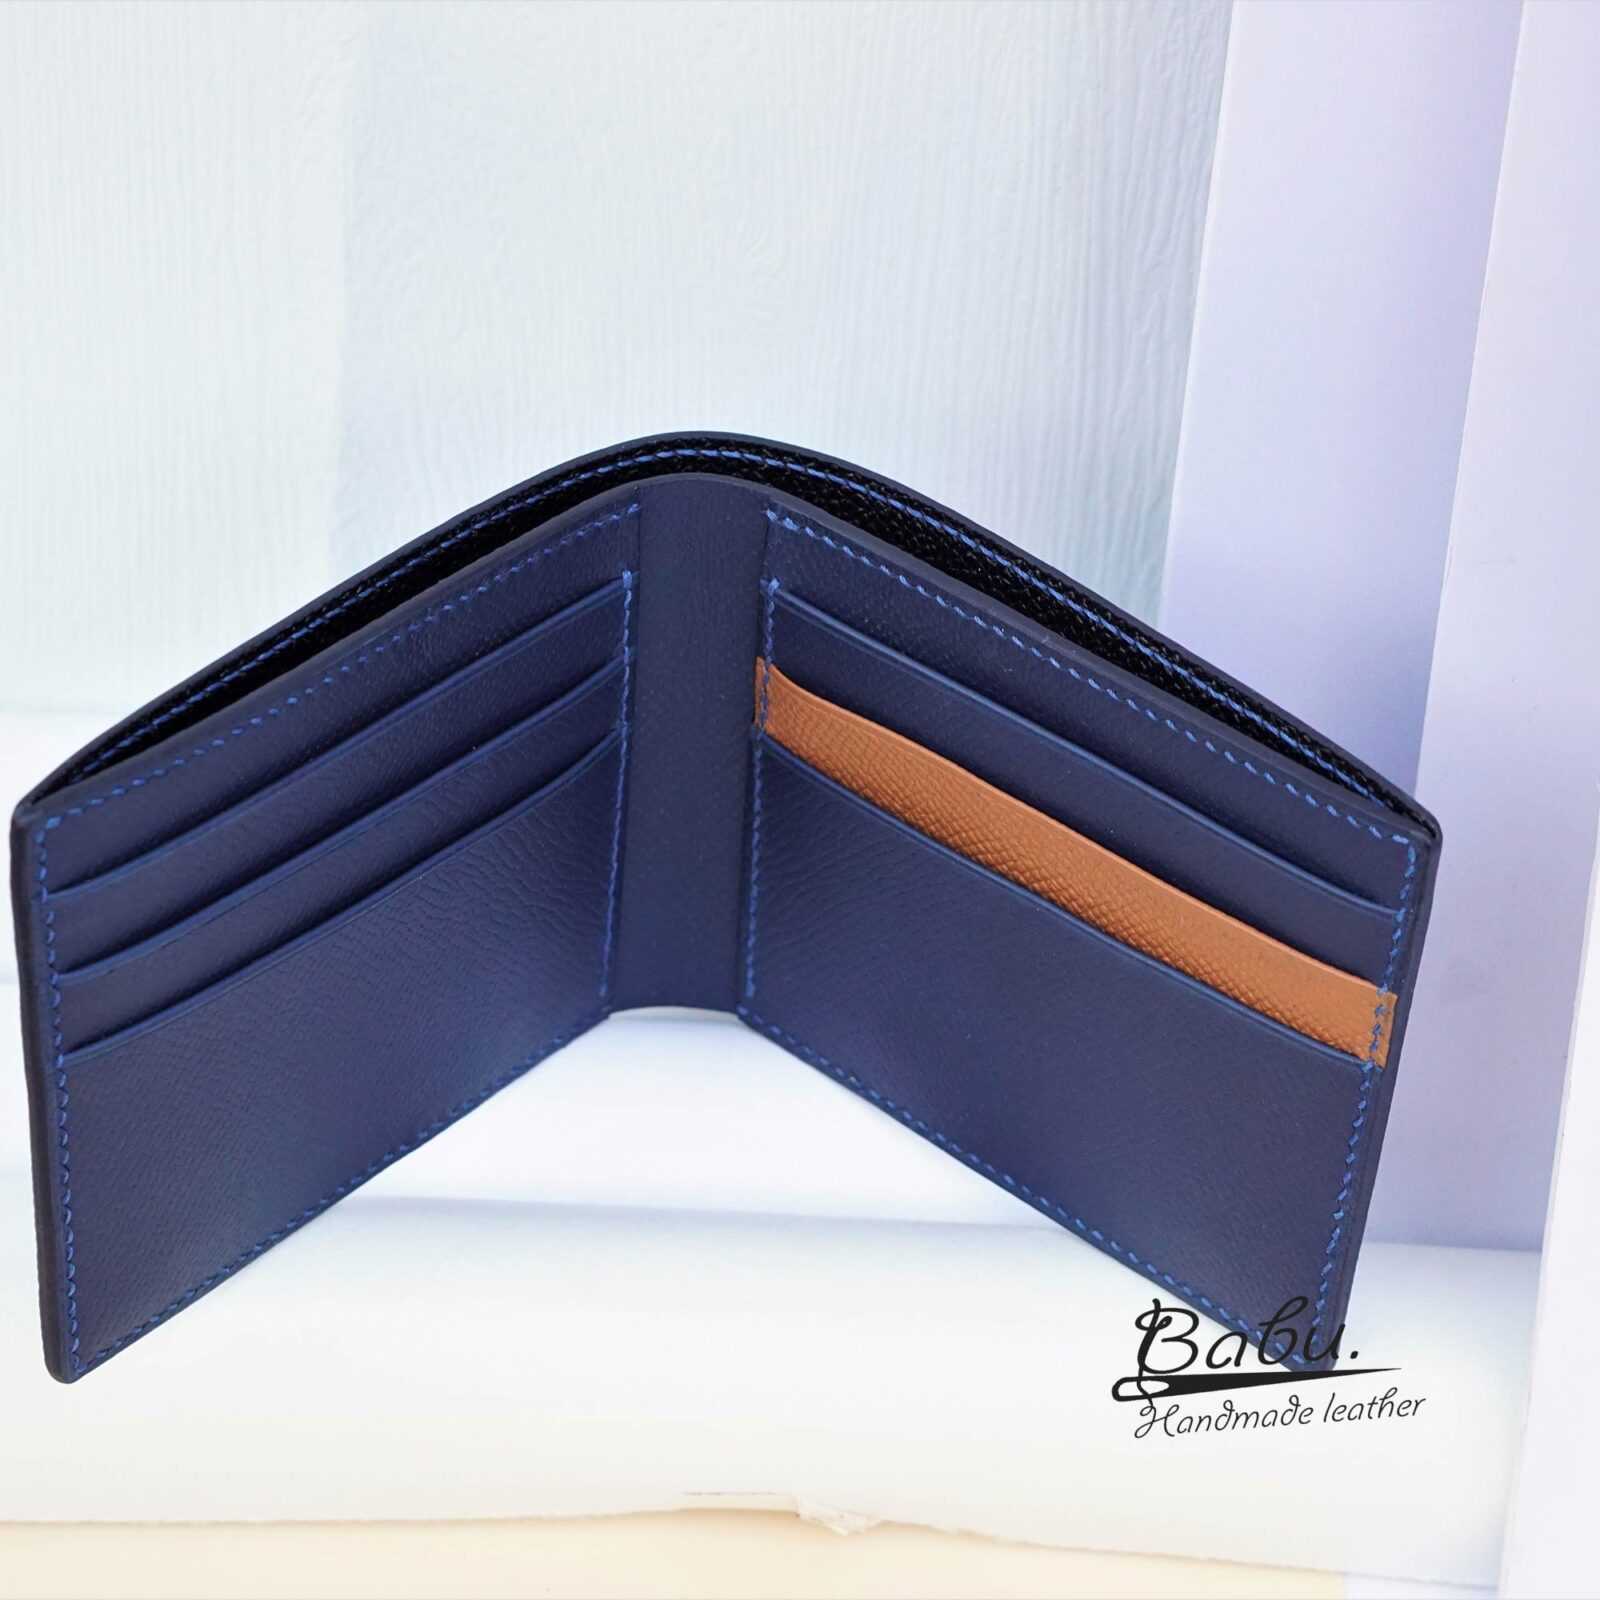 Beukende Bouwen op Eenheid Navy Blue Epi leather wallet, Calf leather bifold wallet WL276 - Babu  Handmade Leather